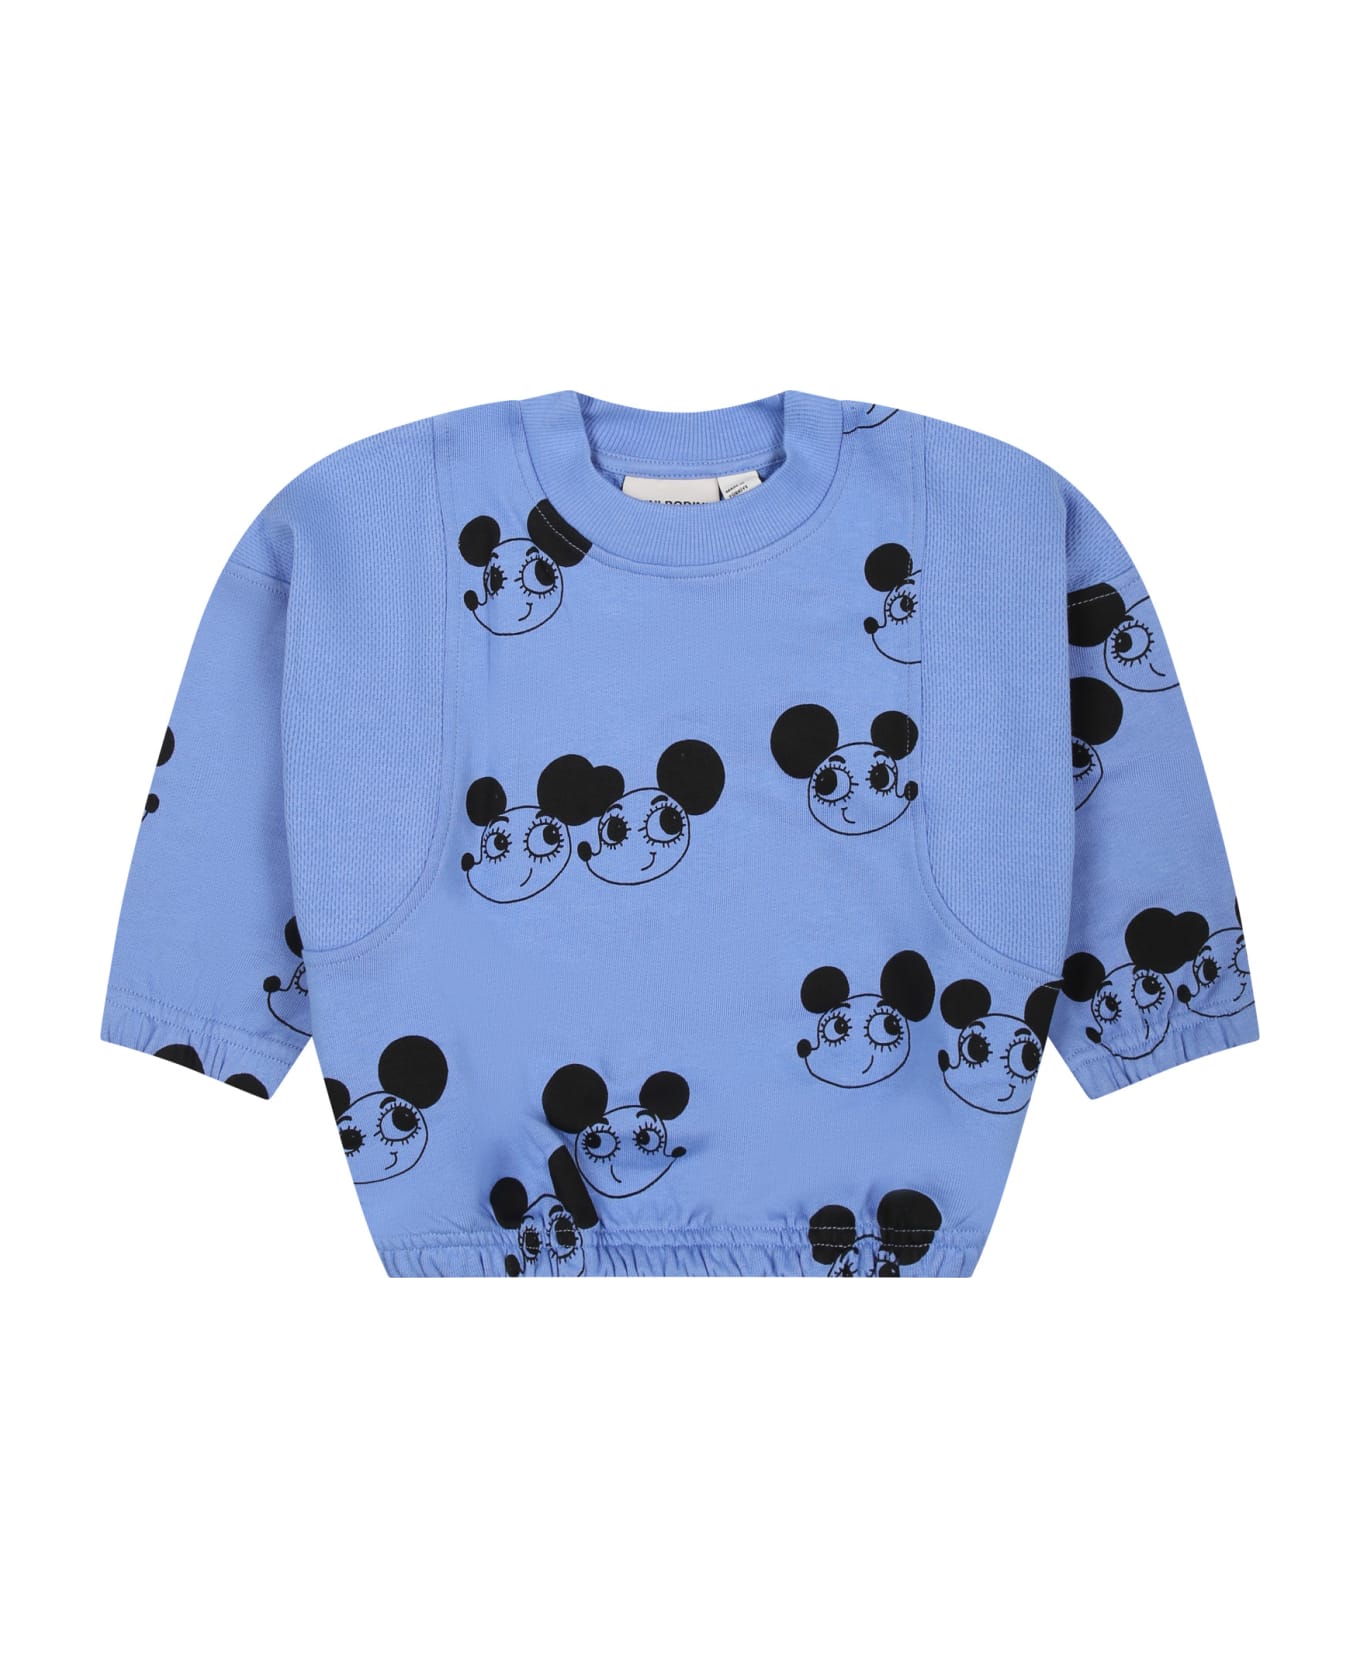 Mini Rodini Light Blue Sweatshirt For Baby Boy With Mice - Light Blue ボトムス